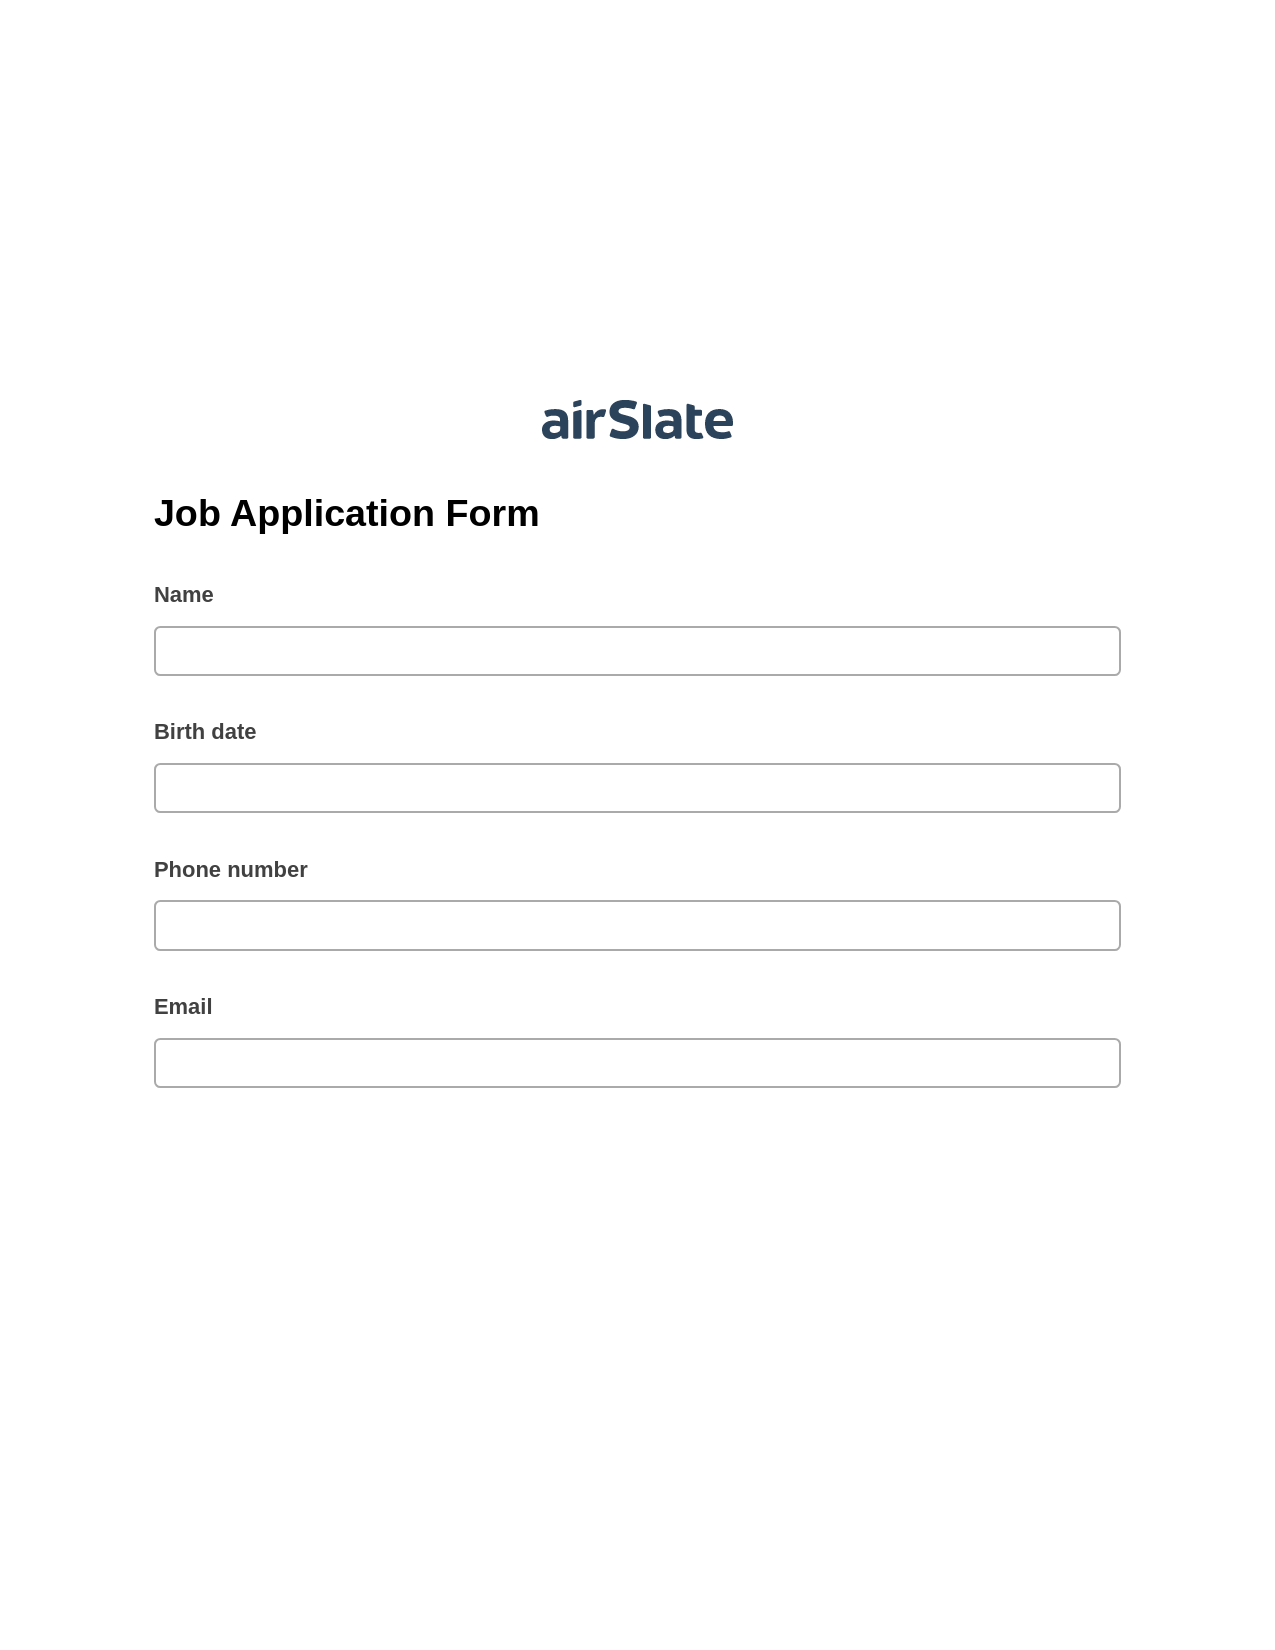 Job Application Form Pre-fill from Google Sheets Bot, Pre-fill with Custom Data Bot, Slack Notification Postfinish Bot